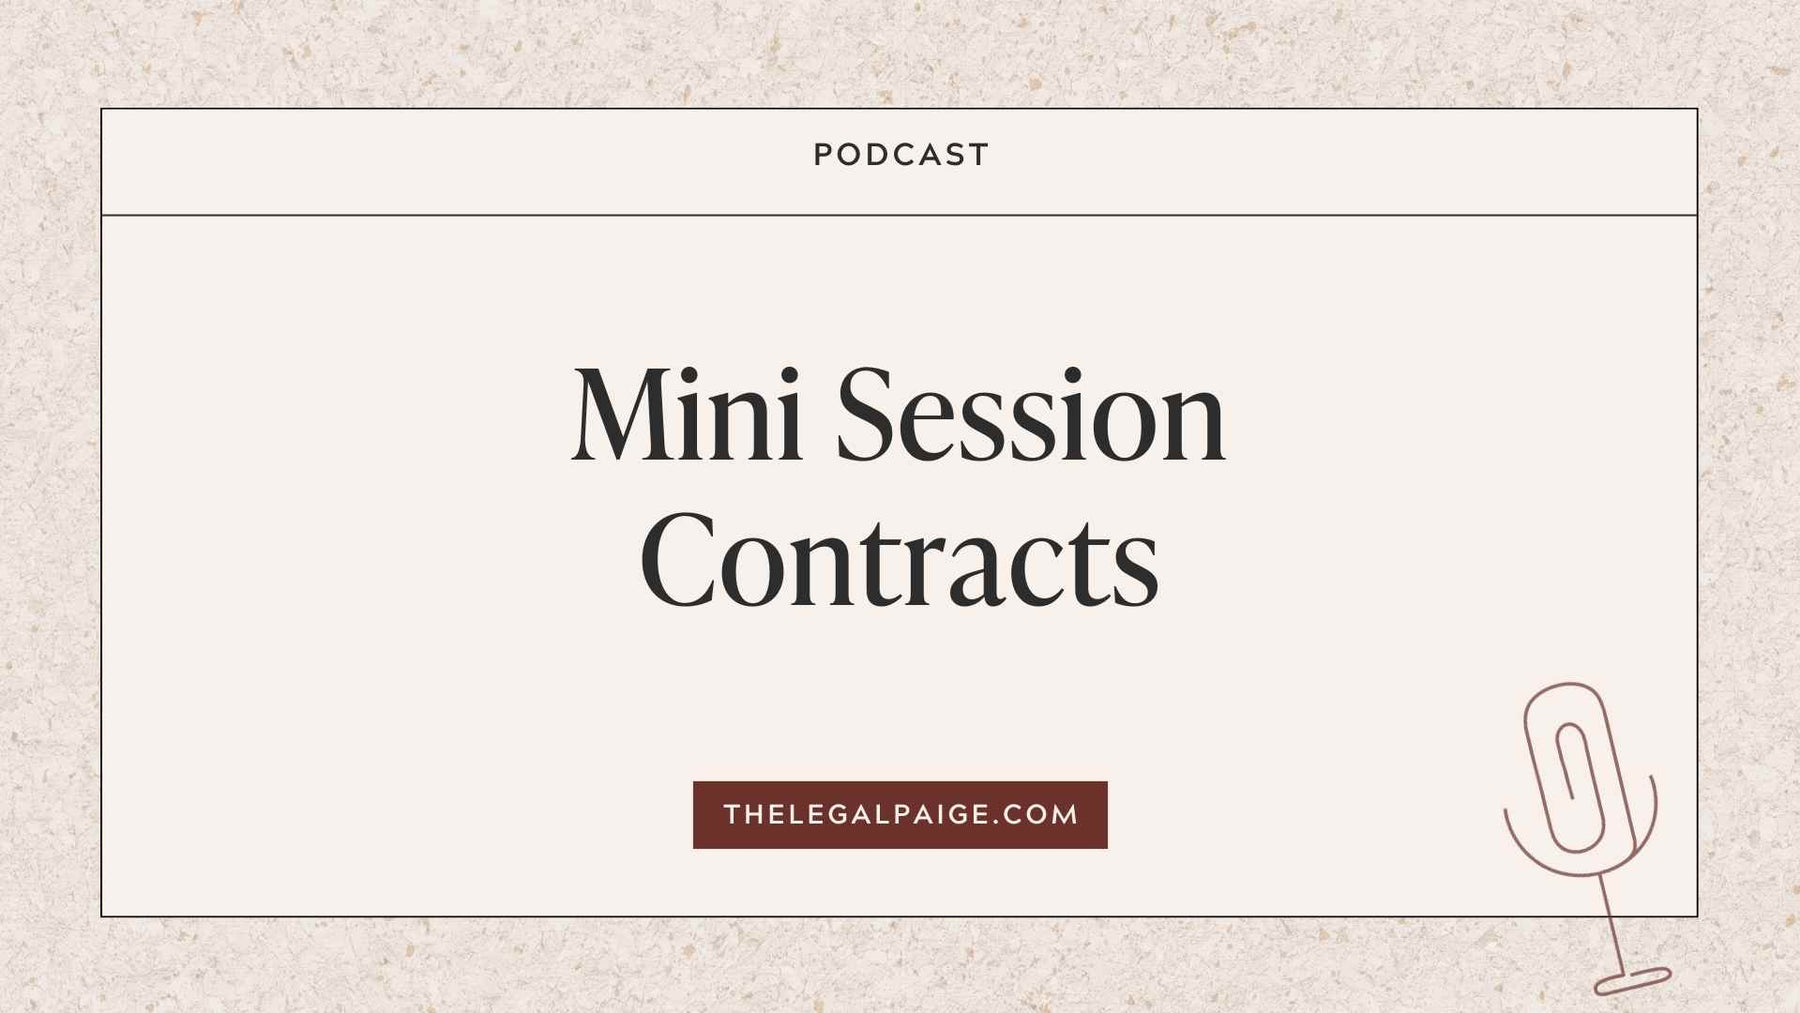 Episode 36: Mini Session Contracts